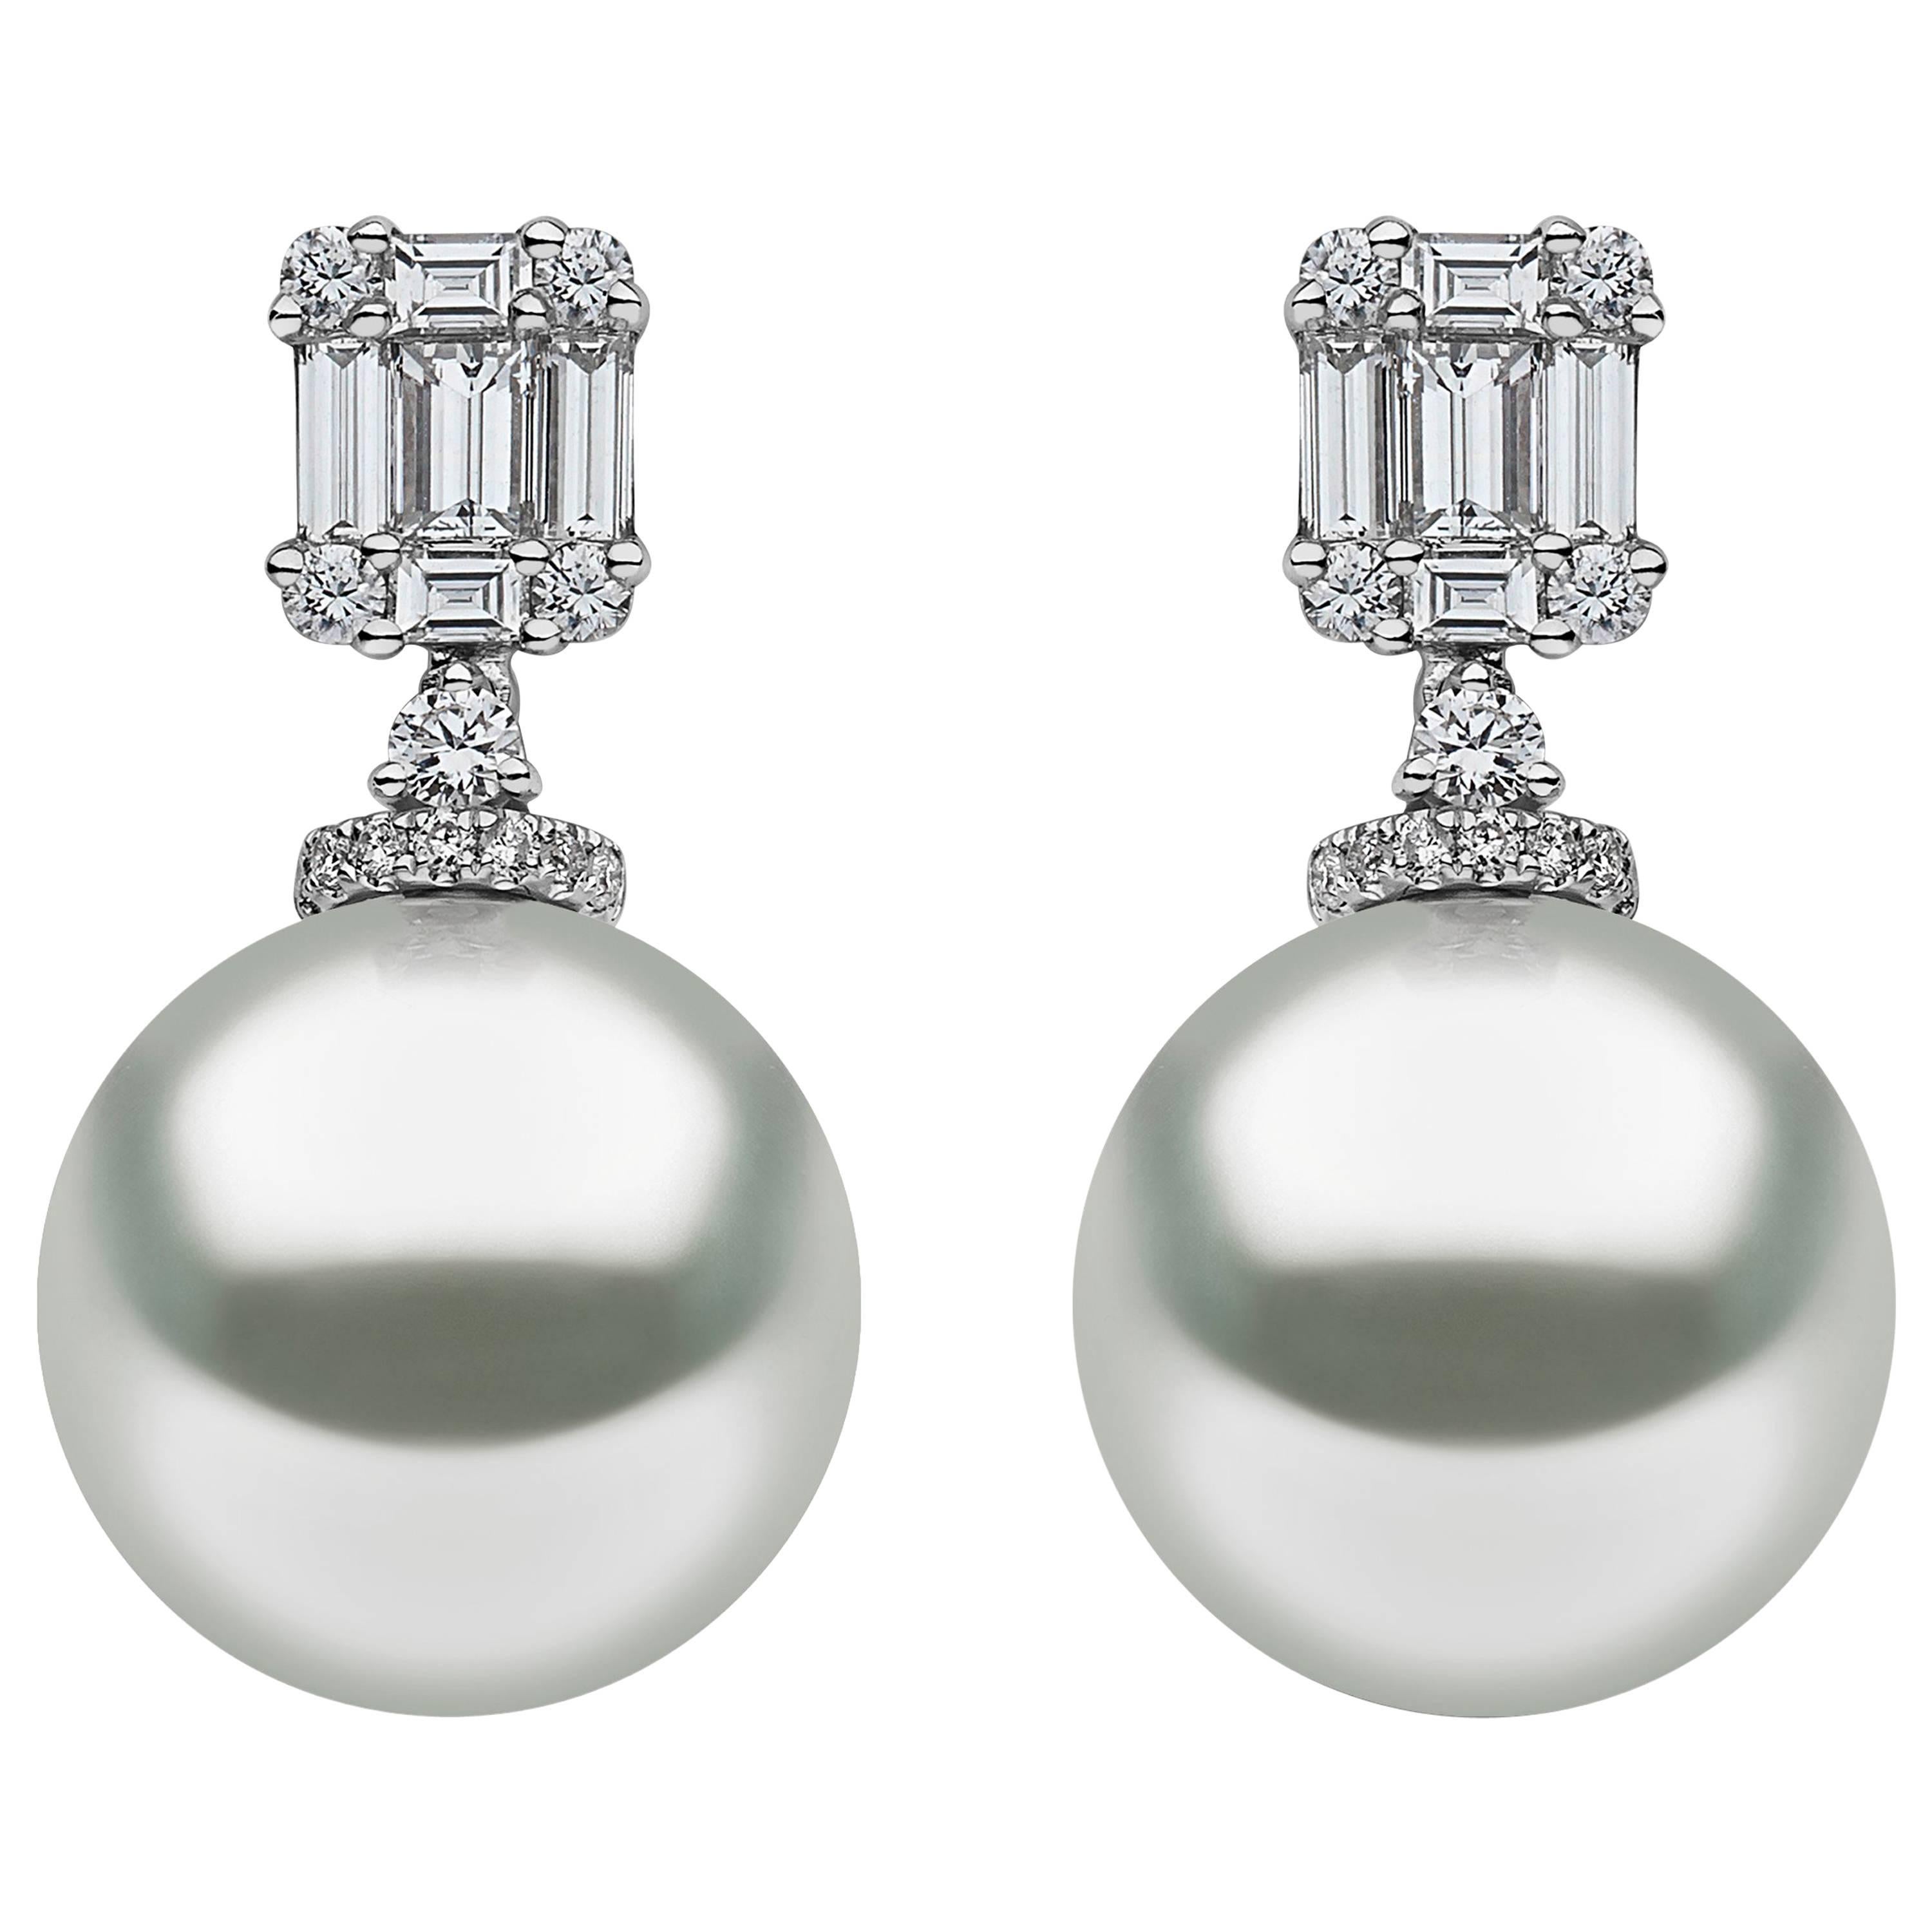 Yoko London South Sea Pearl and Diamond Earrings set in 18K 